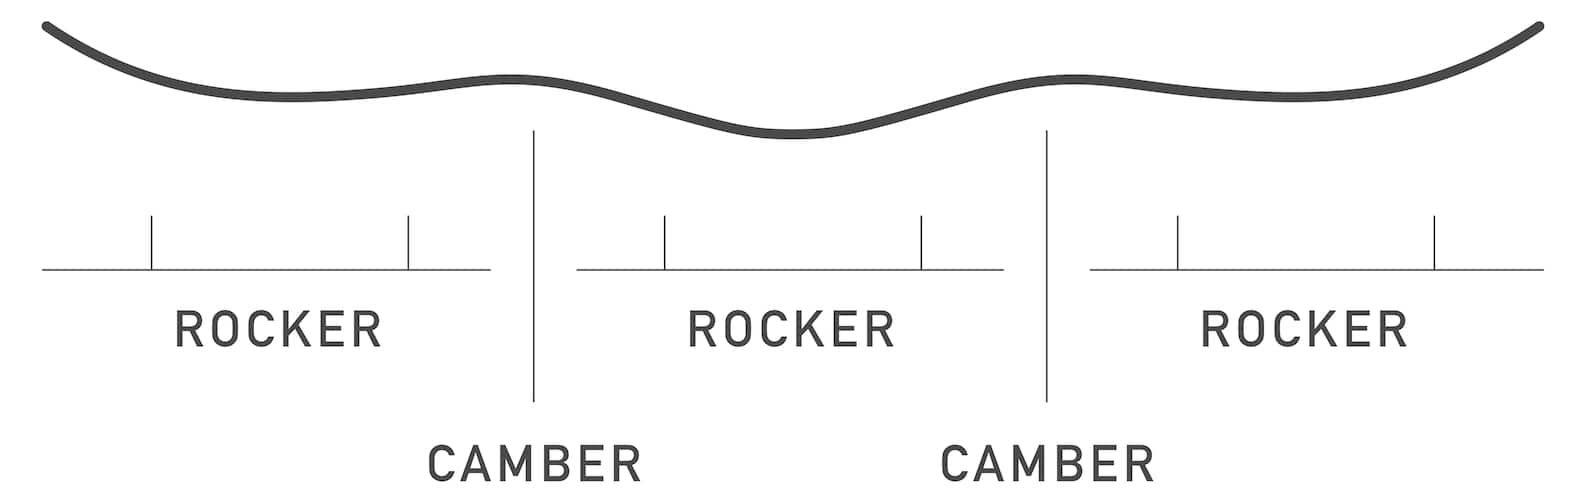 Snowboard Guide: Camber vs. Rocker vs. Burton